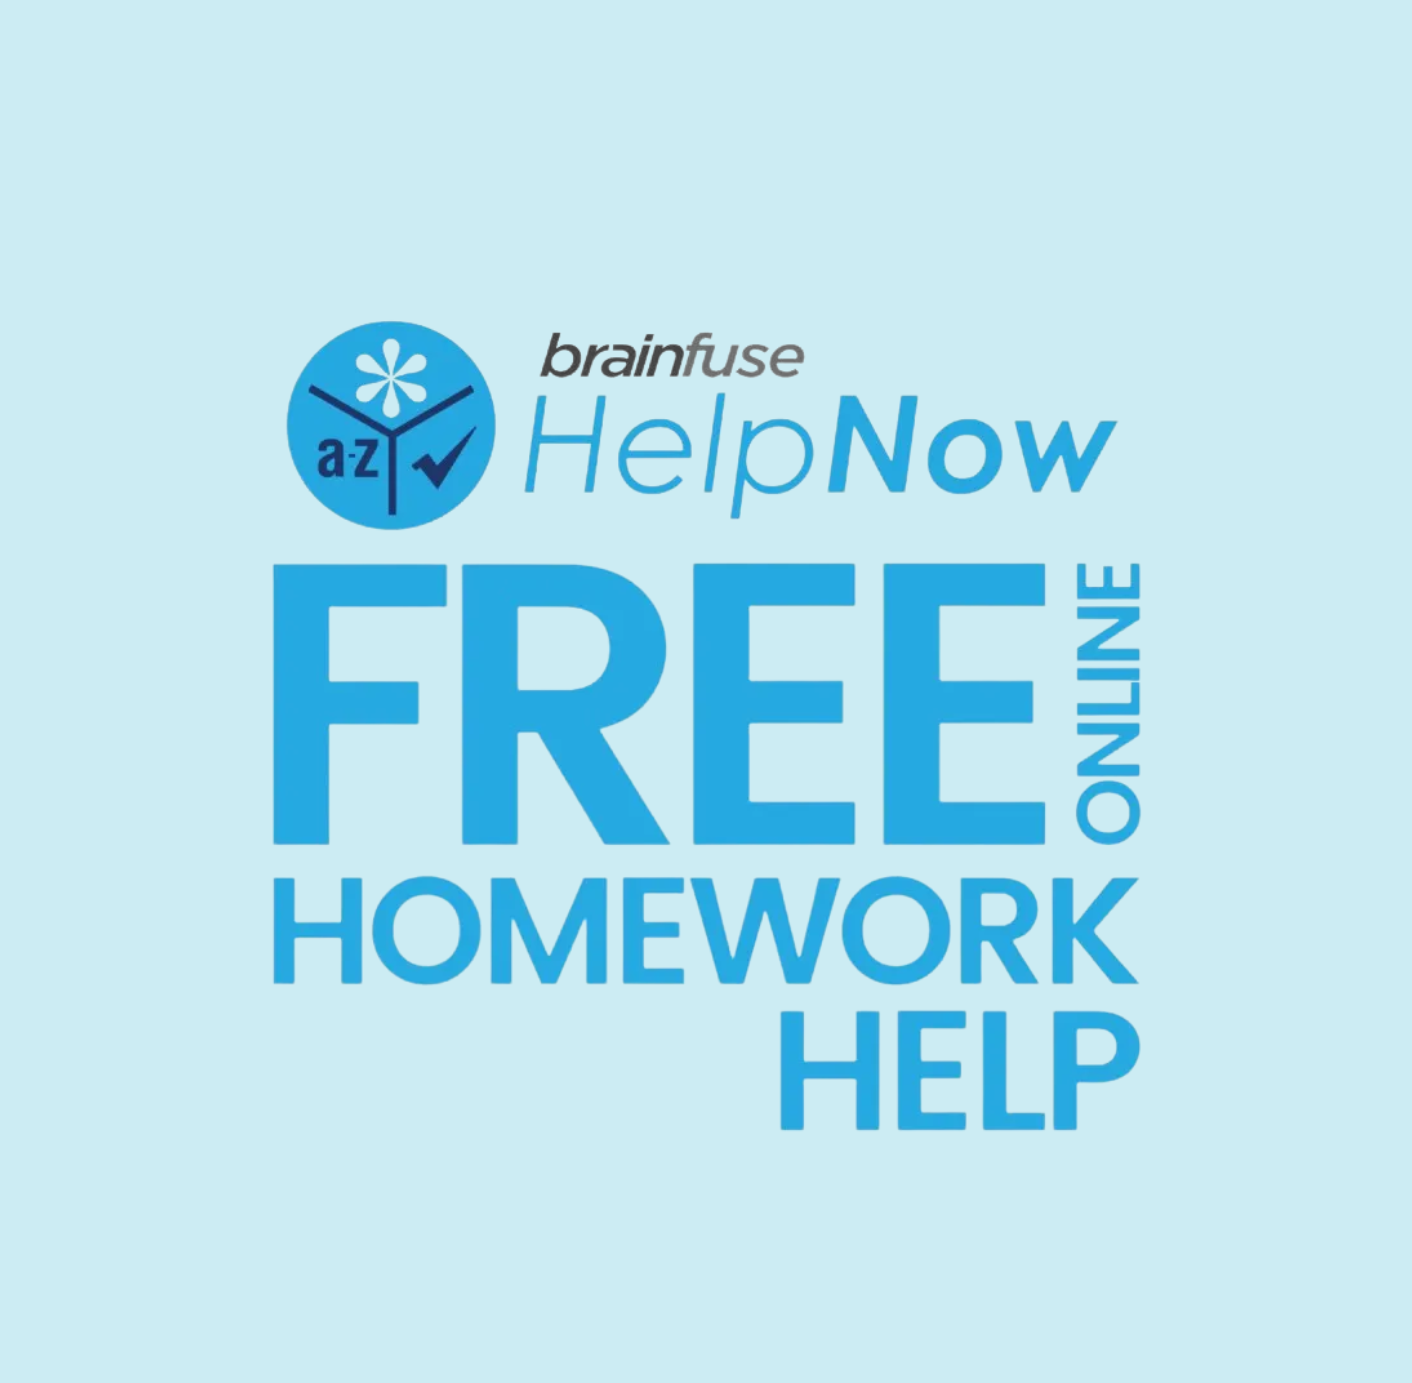 brainfuse helpnow logo homework help online